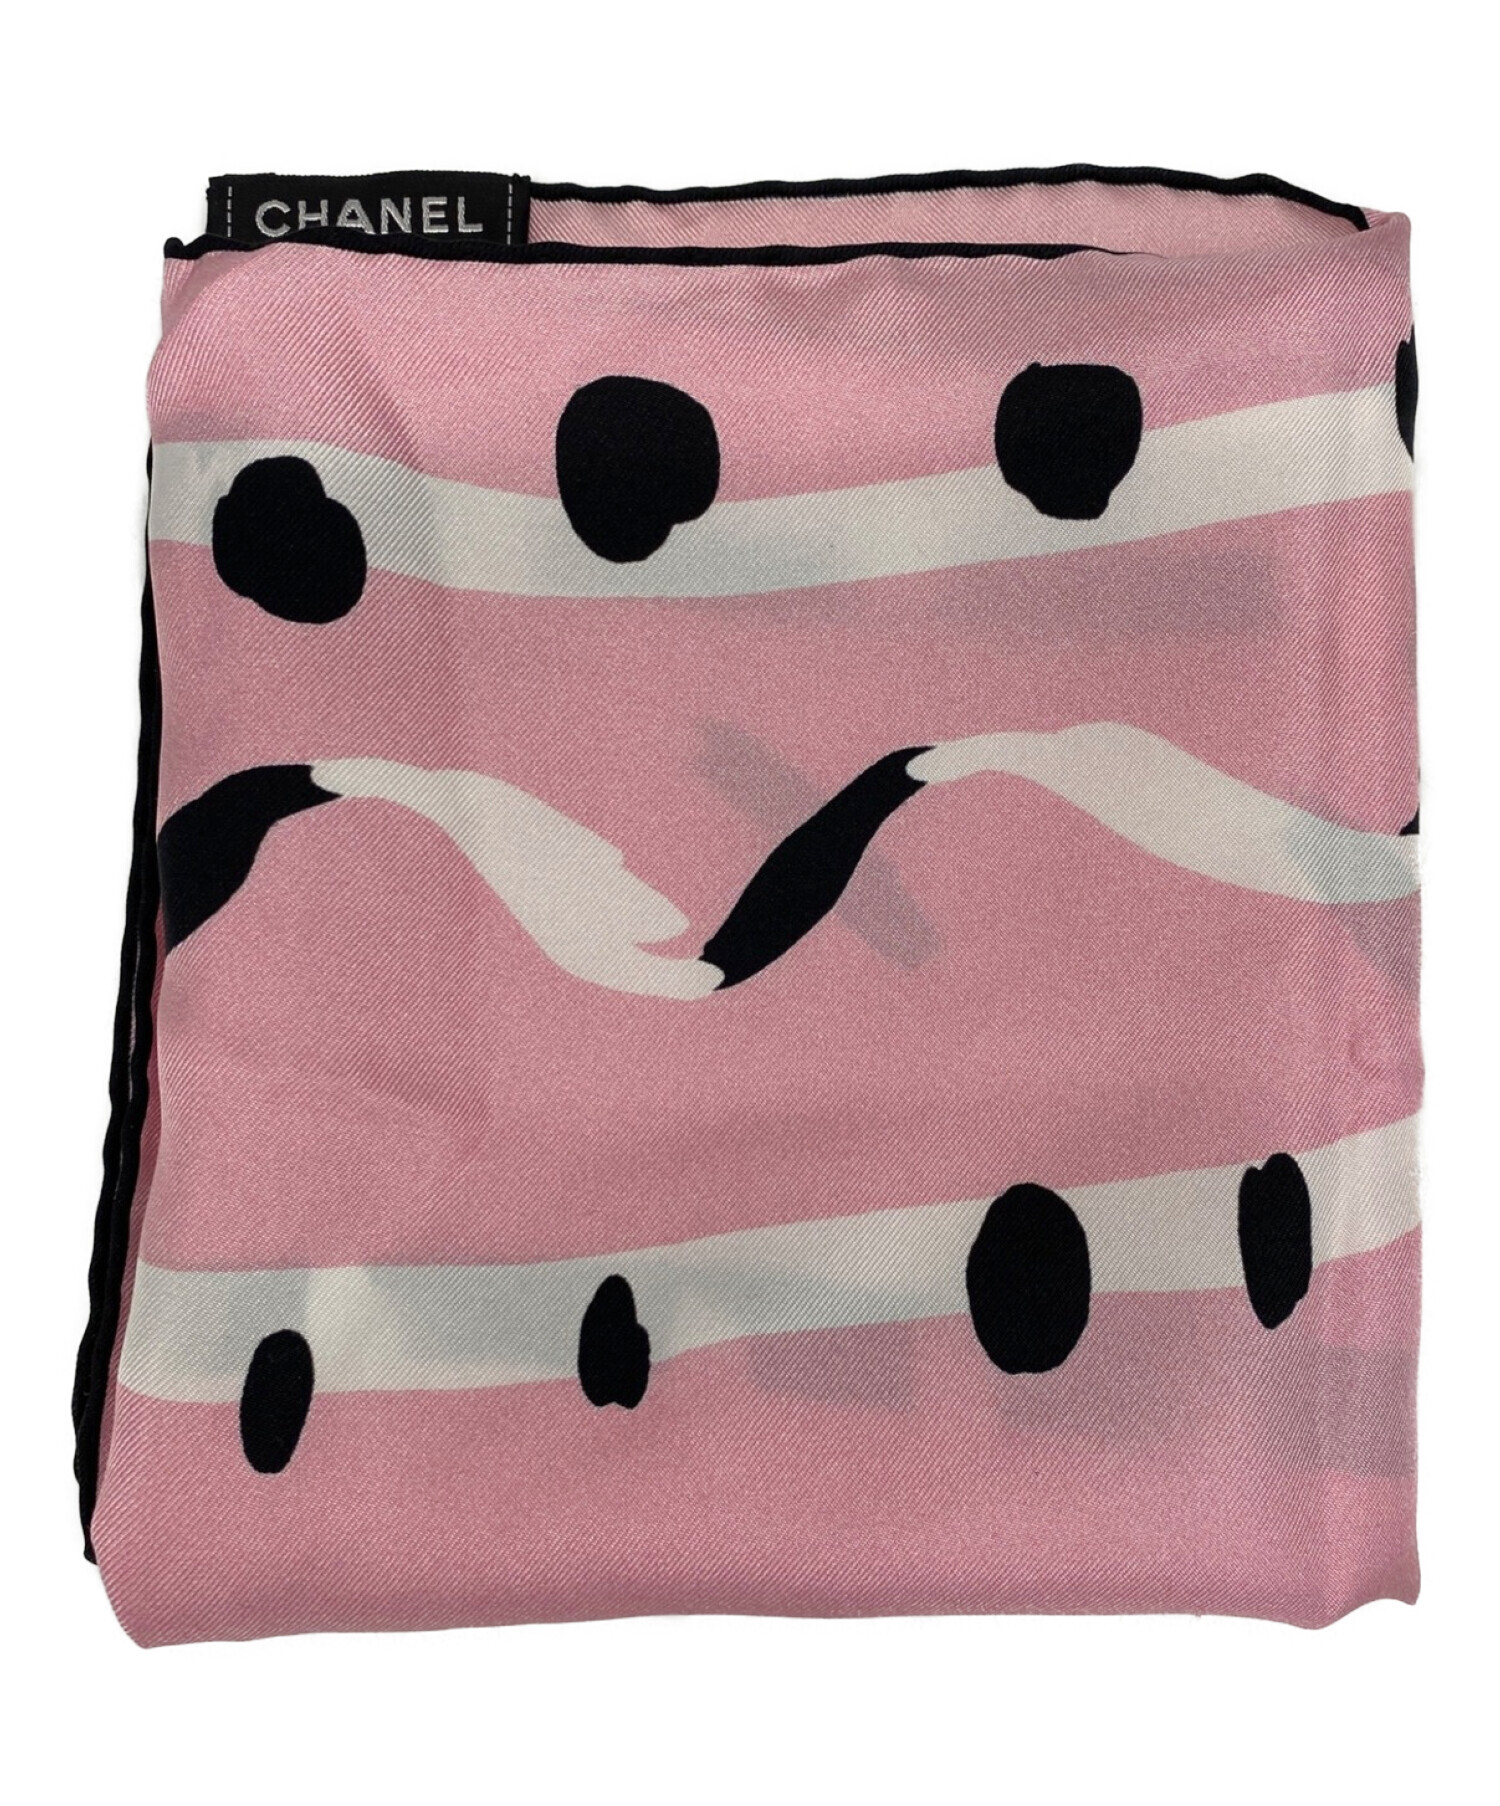 CHANEL シャネル スカーフ シルク ドット柄 ピンク タグありけろほーむ 